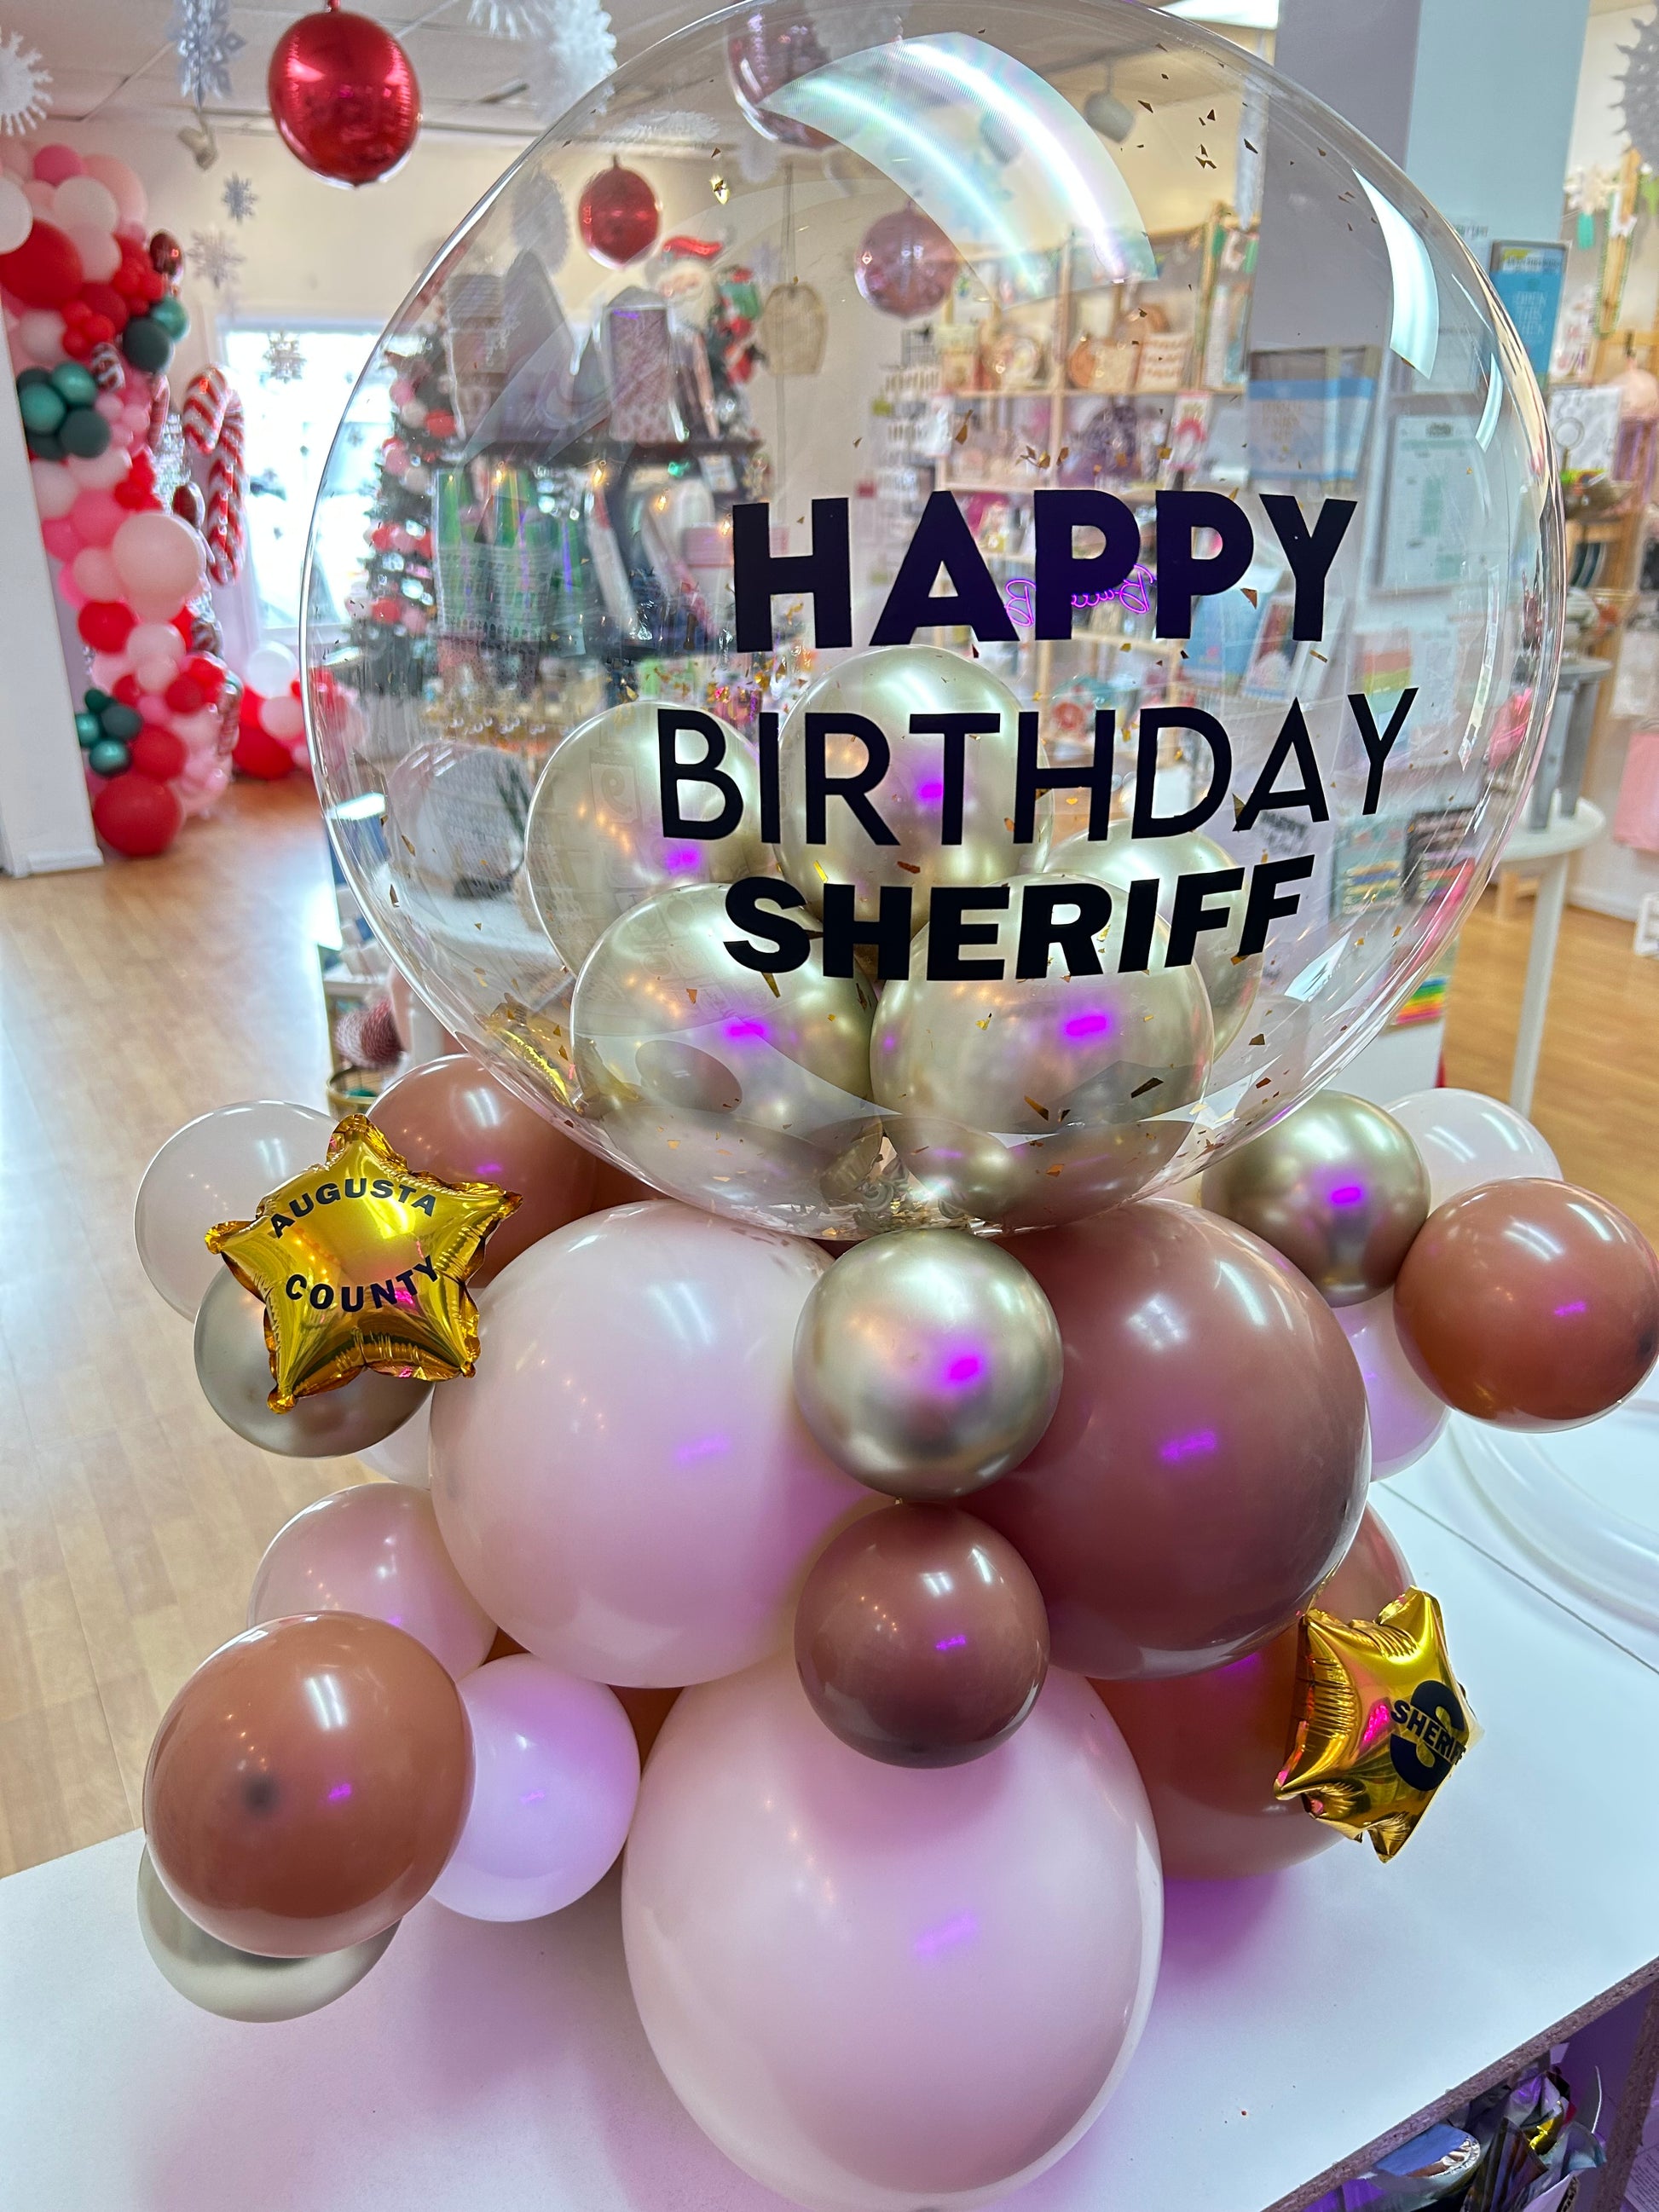 Modern Bobo Balloon Bouquet – NOW ITS A PARTY